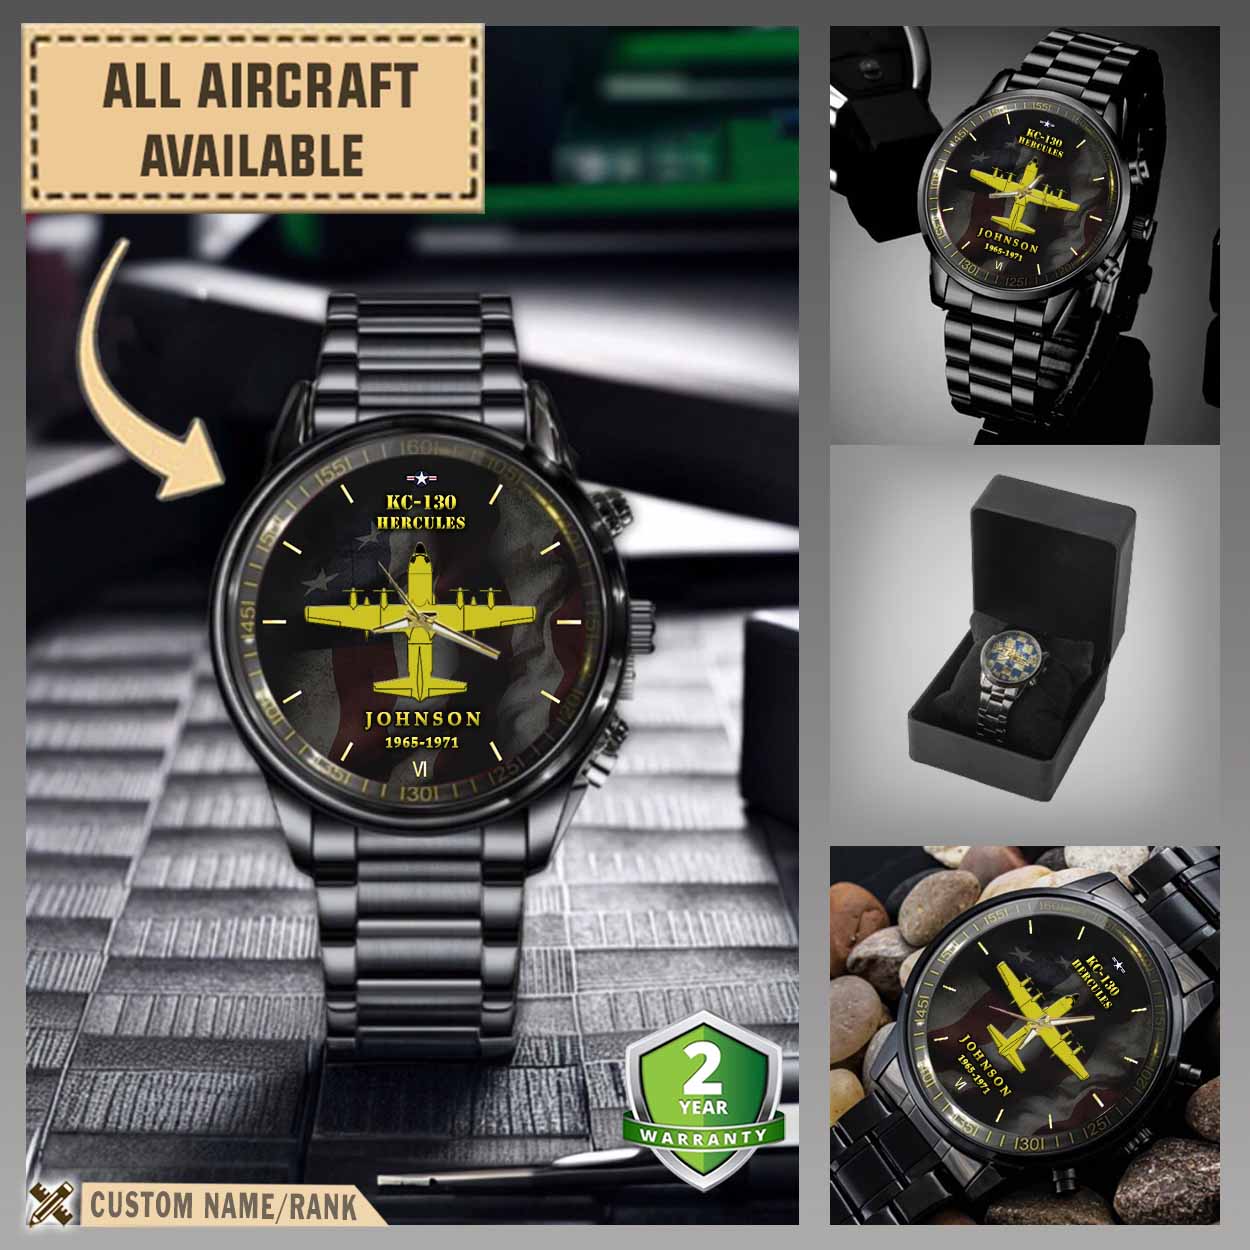 kc 130 hercules kc130aircraft black wrist watch 9n5fh